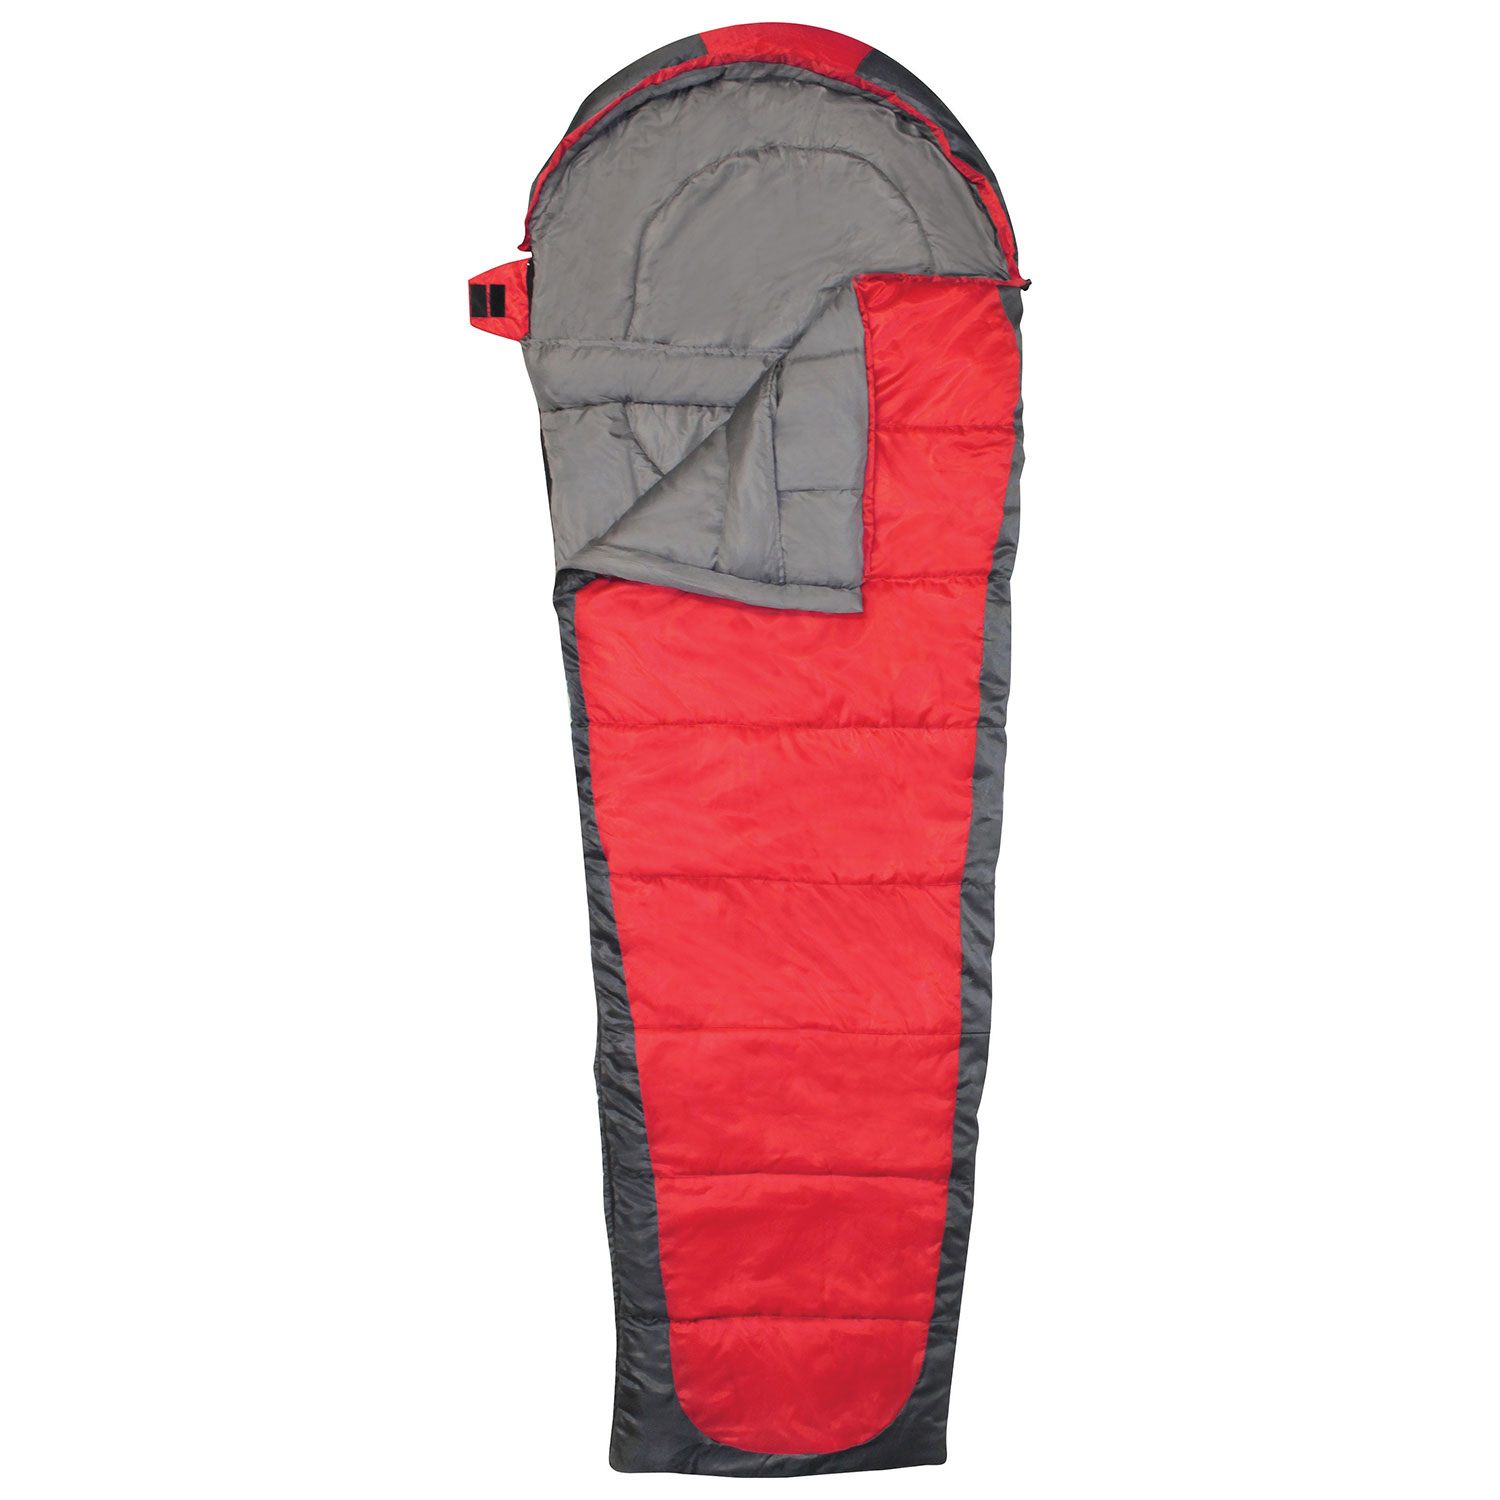 Rockwater Designs Semi-Rectangular Heat Zone Sleeping Bag (-20-Degrees Celcius) - Red/Dark Grey